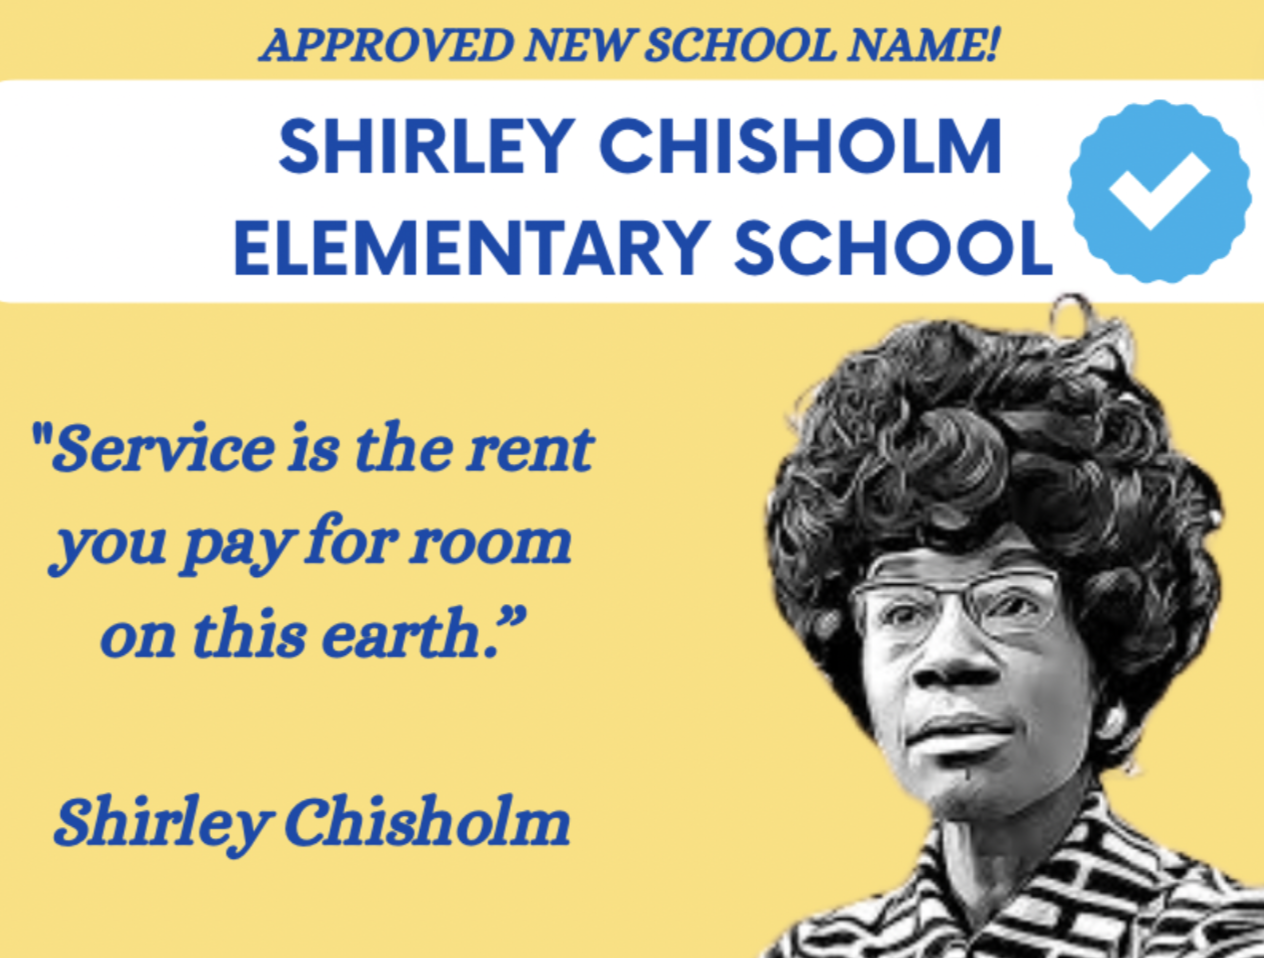 Shirley Chisholm (formally Tyler) Elementary